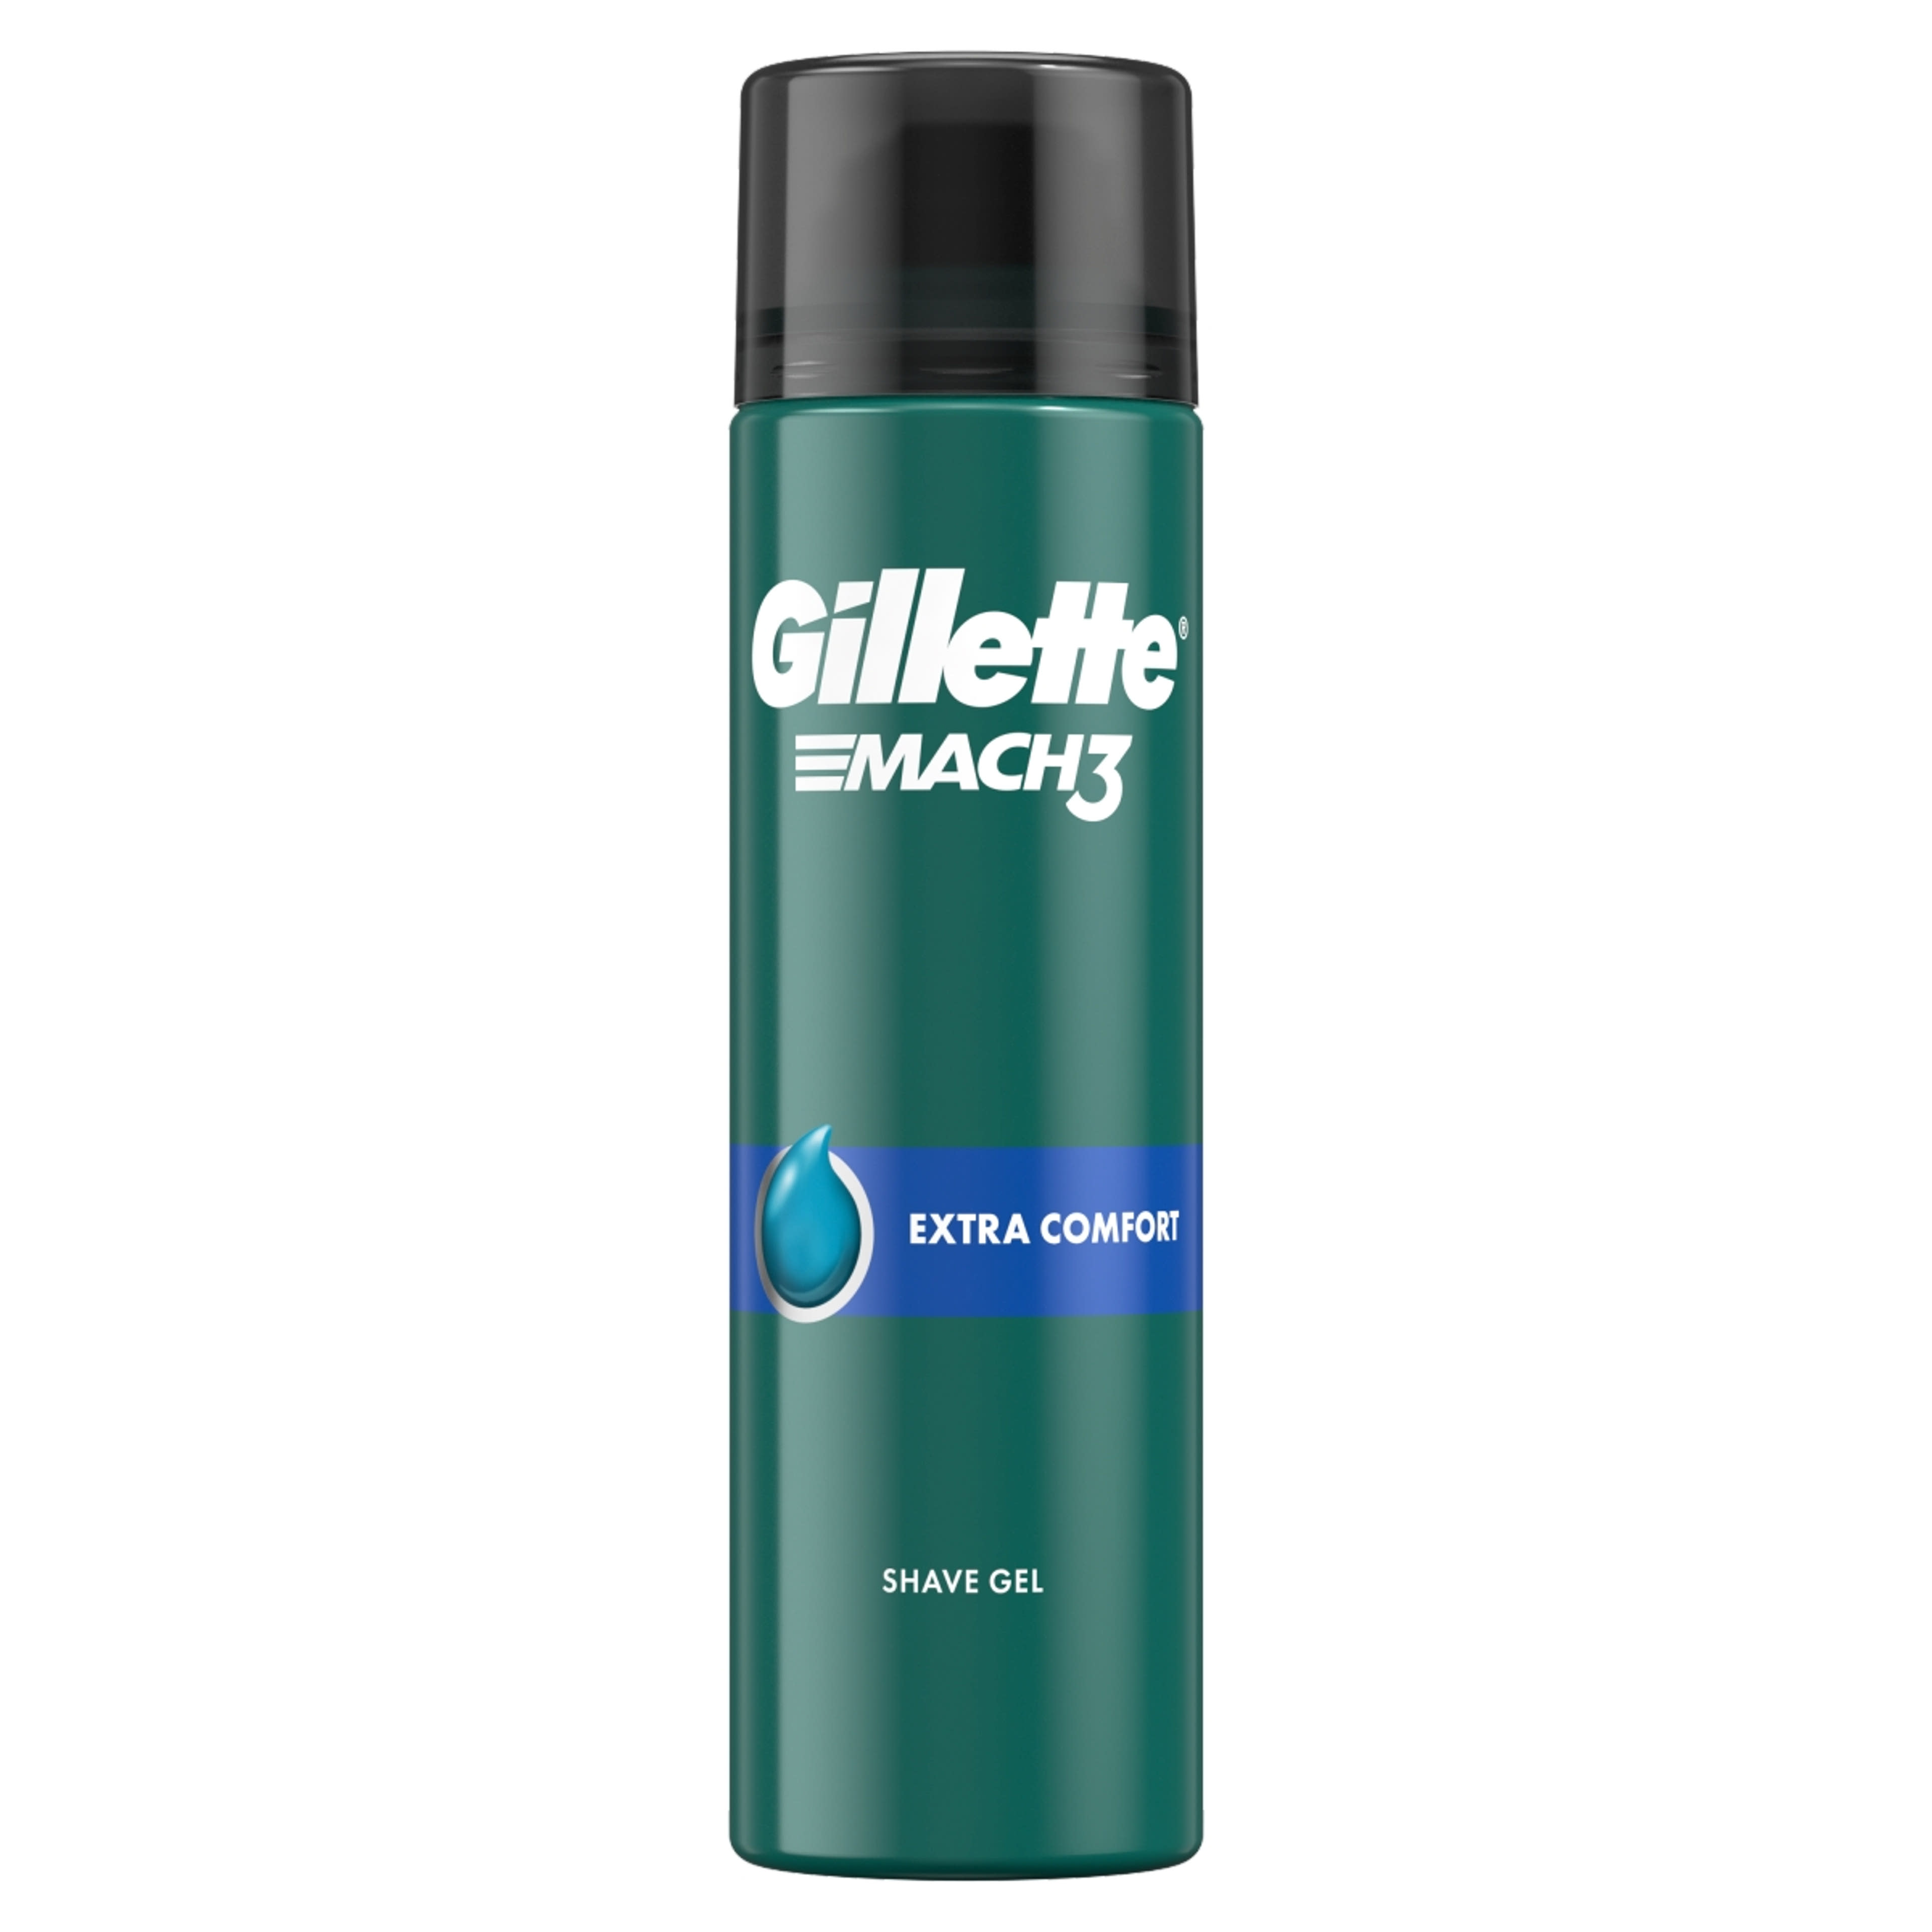 Gillette Mach3 bornyugtató borotvazselé - 200 ml-1